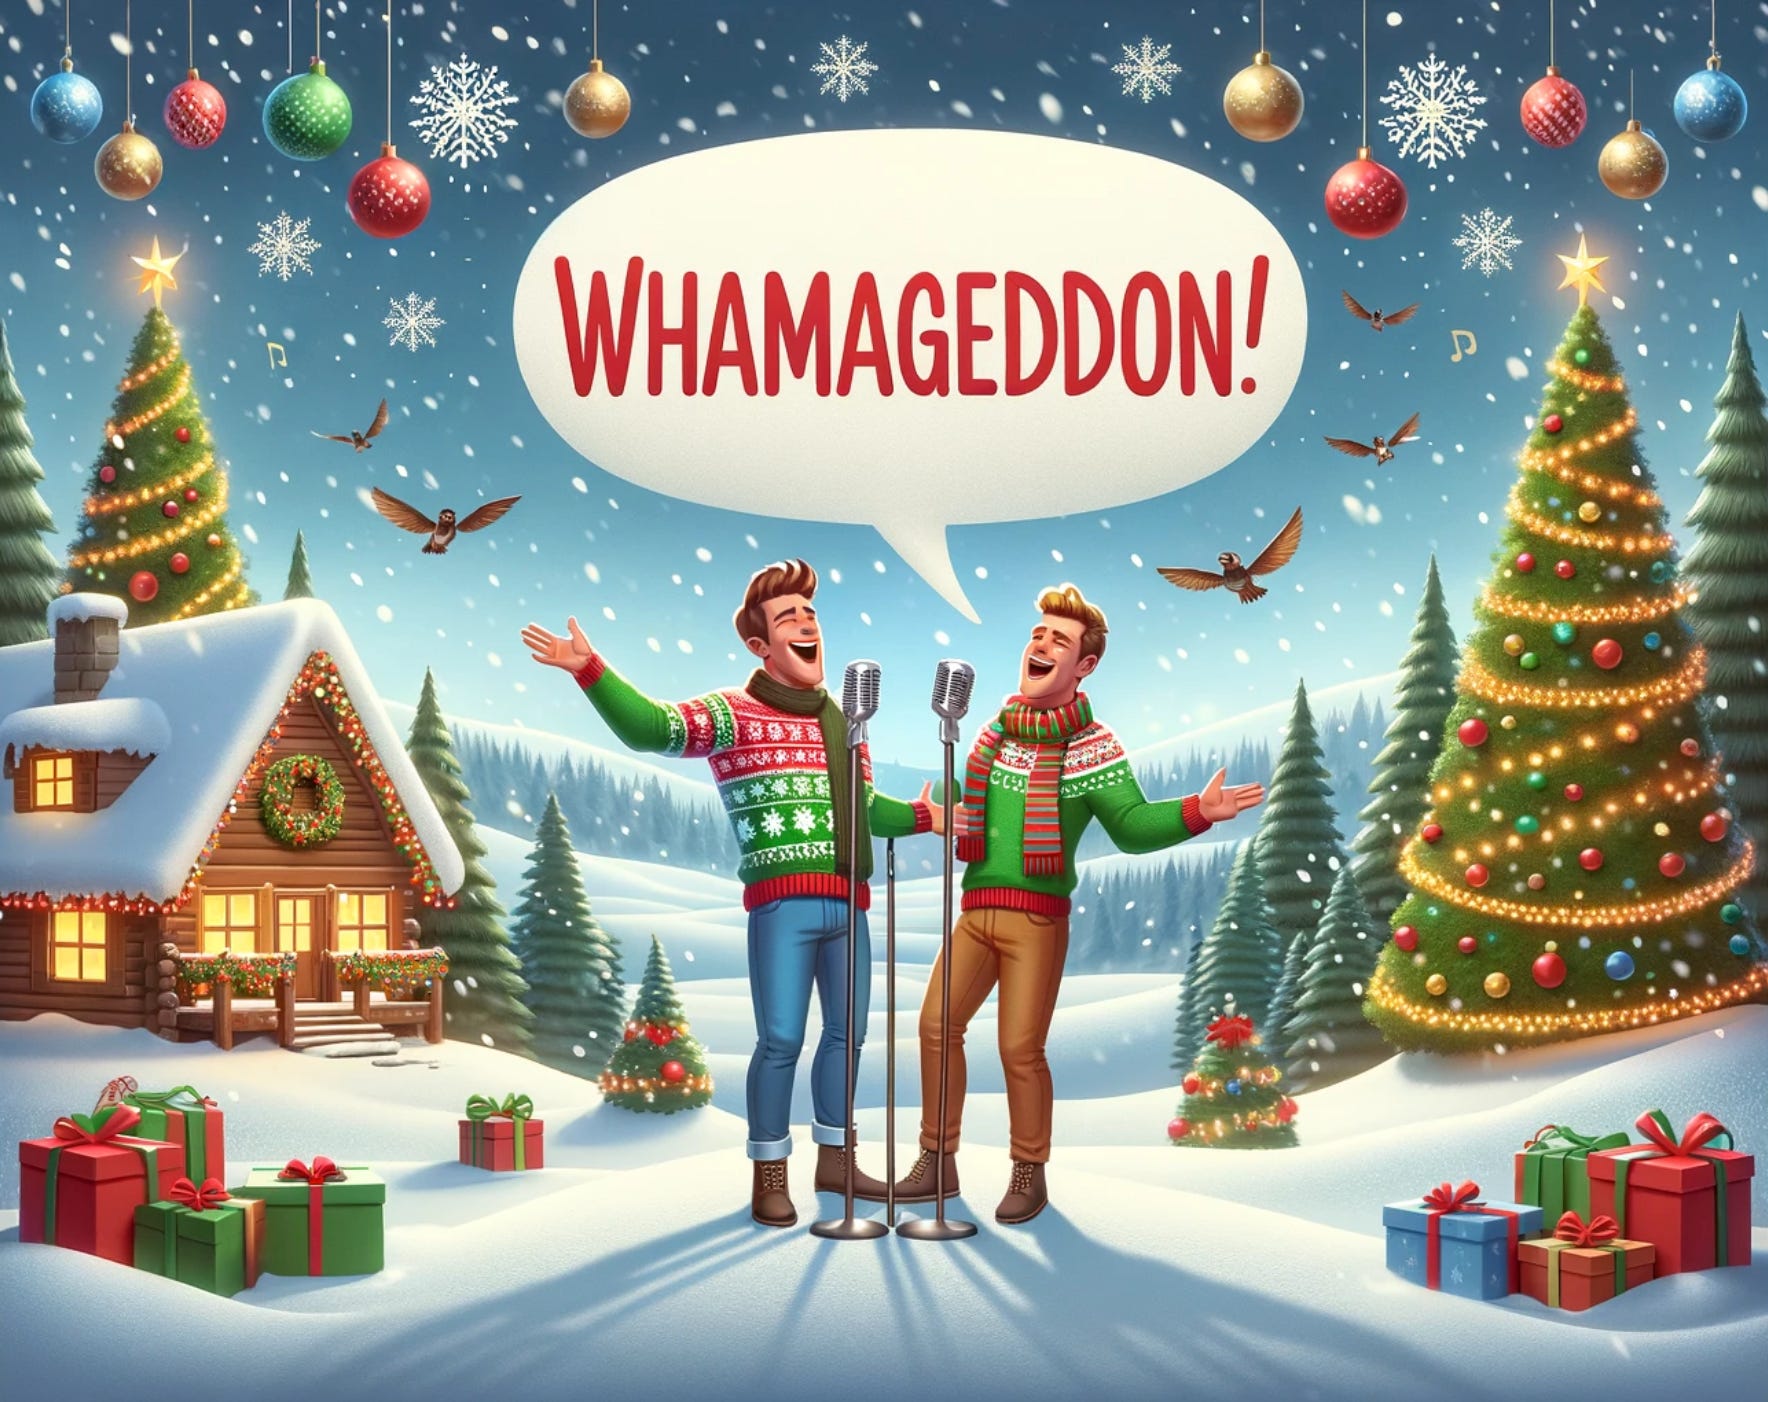 Whamageddon 2023: The Viral Holiday Game Starts Today